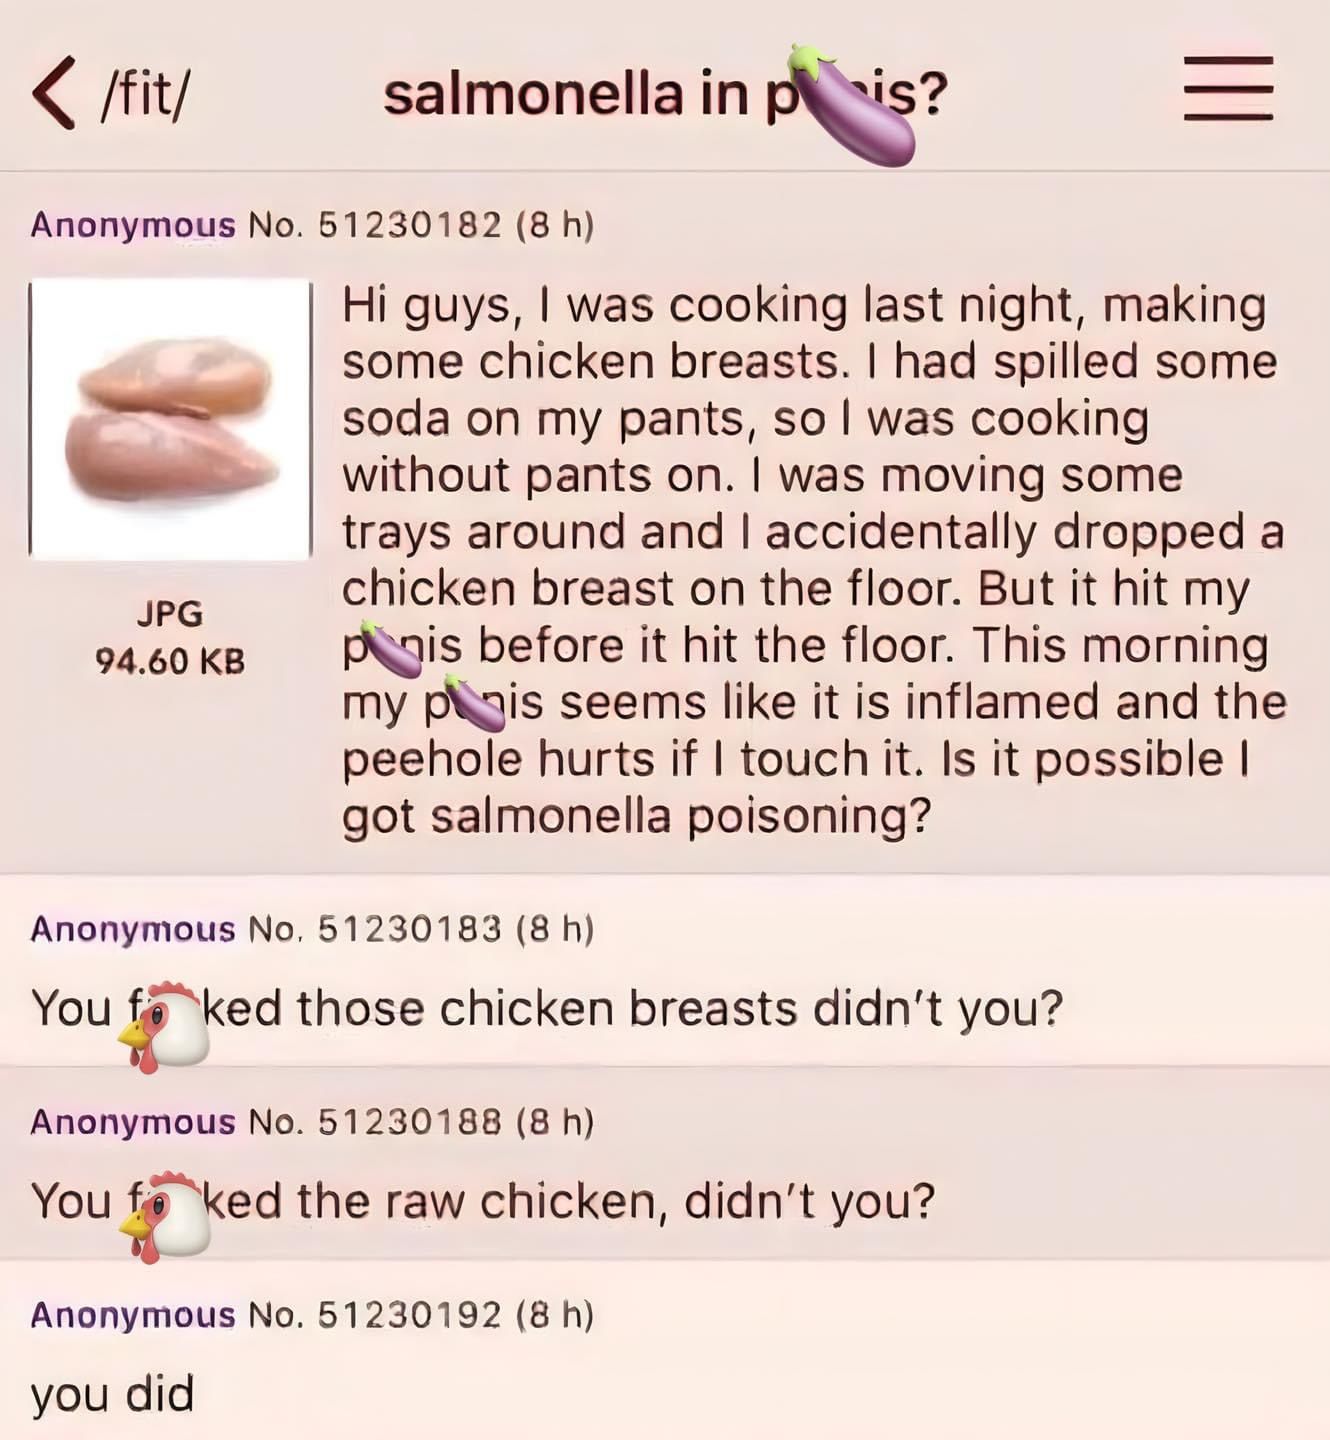 The salmonella incident